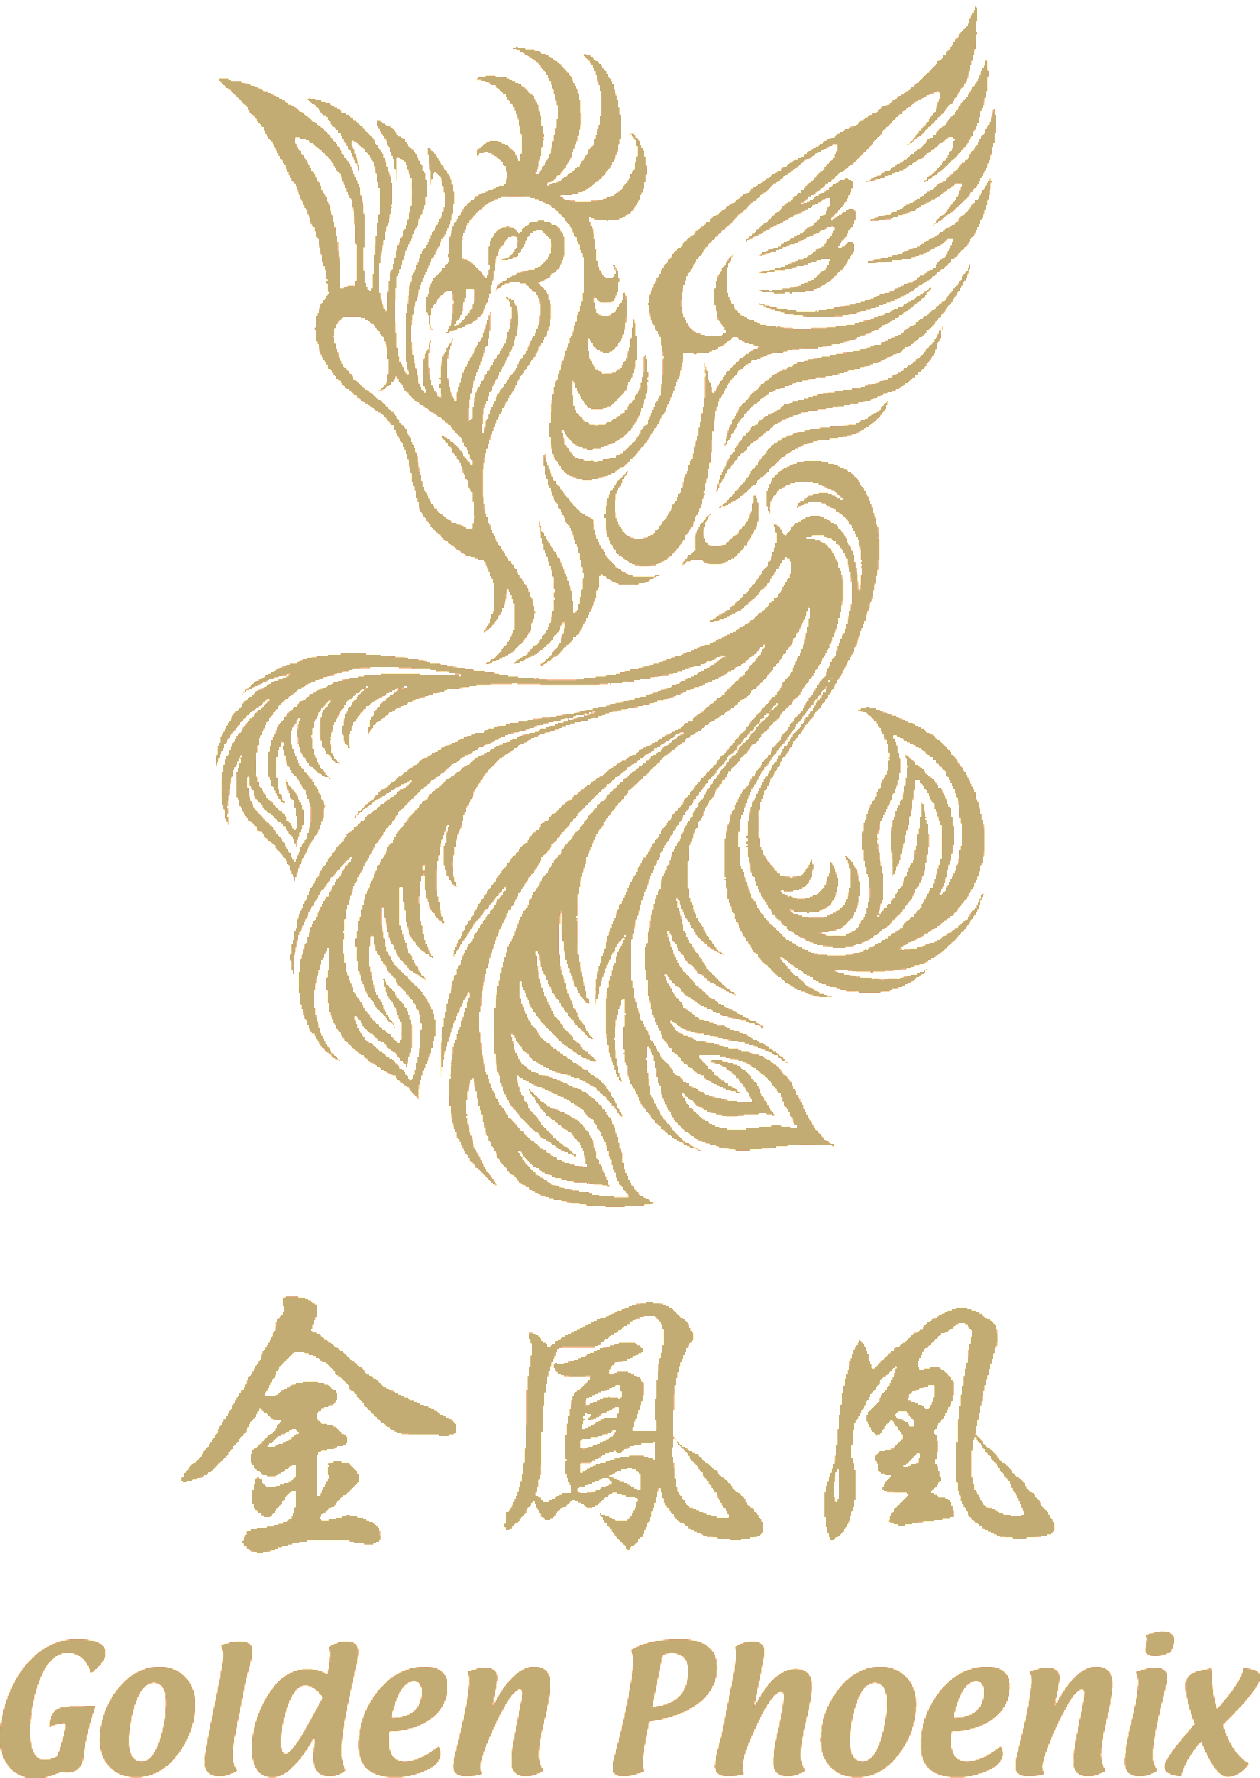 Gold Phoenix Logo - Golden Phoenix. Golden Phoenix China Town